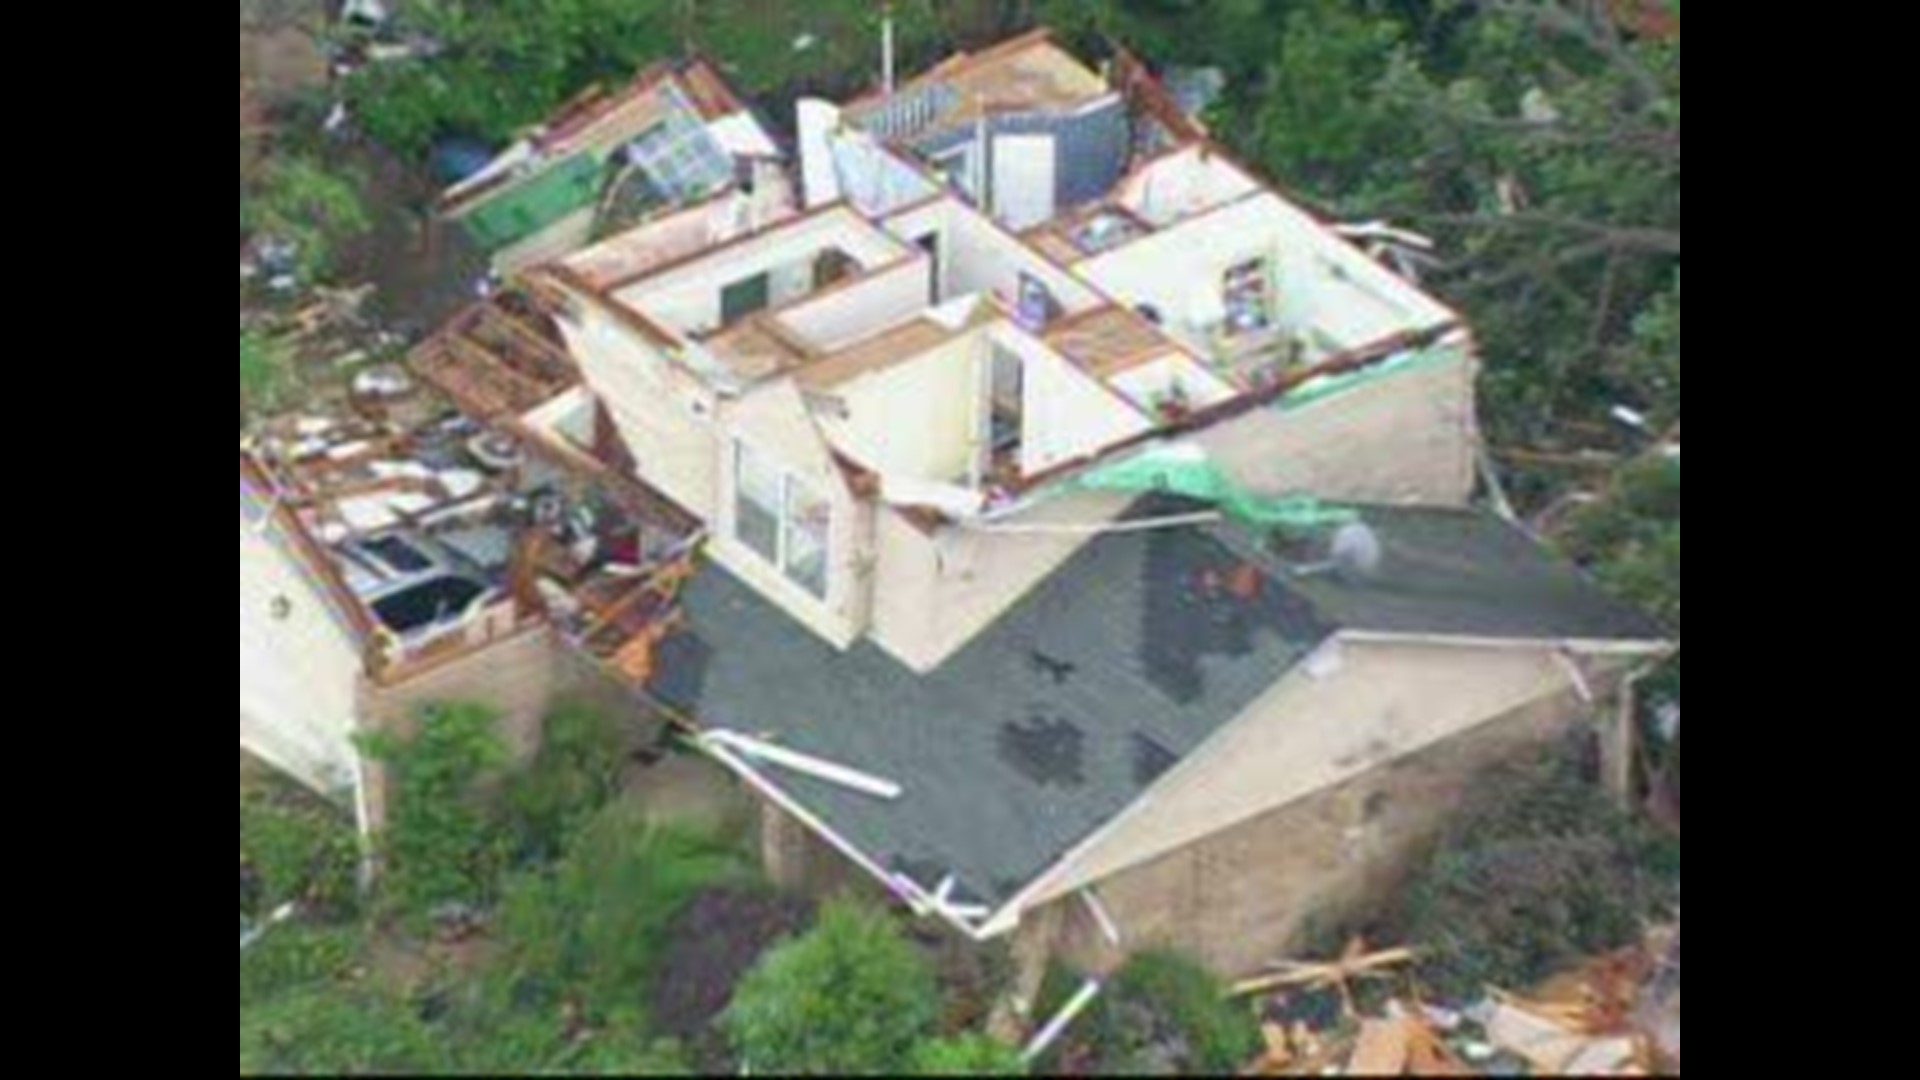 CNN VIDEO: Homes Heavily Damaged by Tornado in Dallas Area